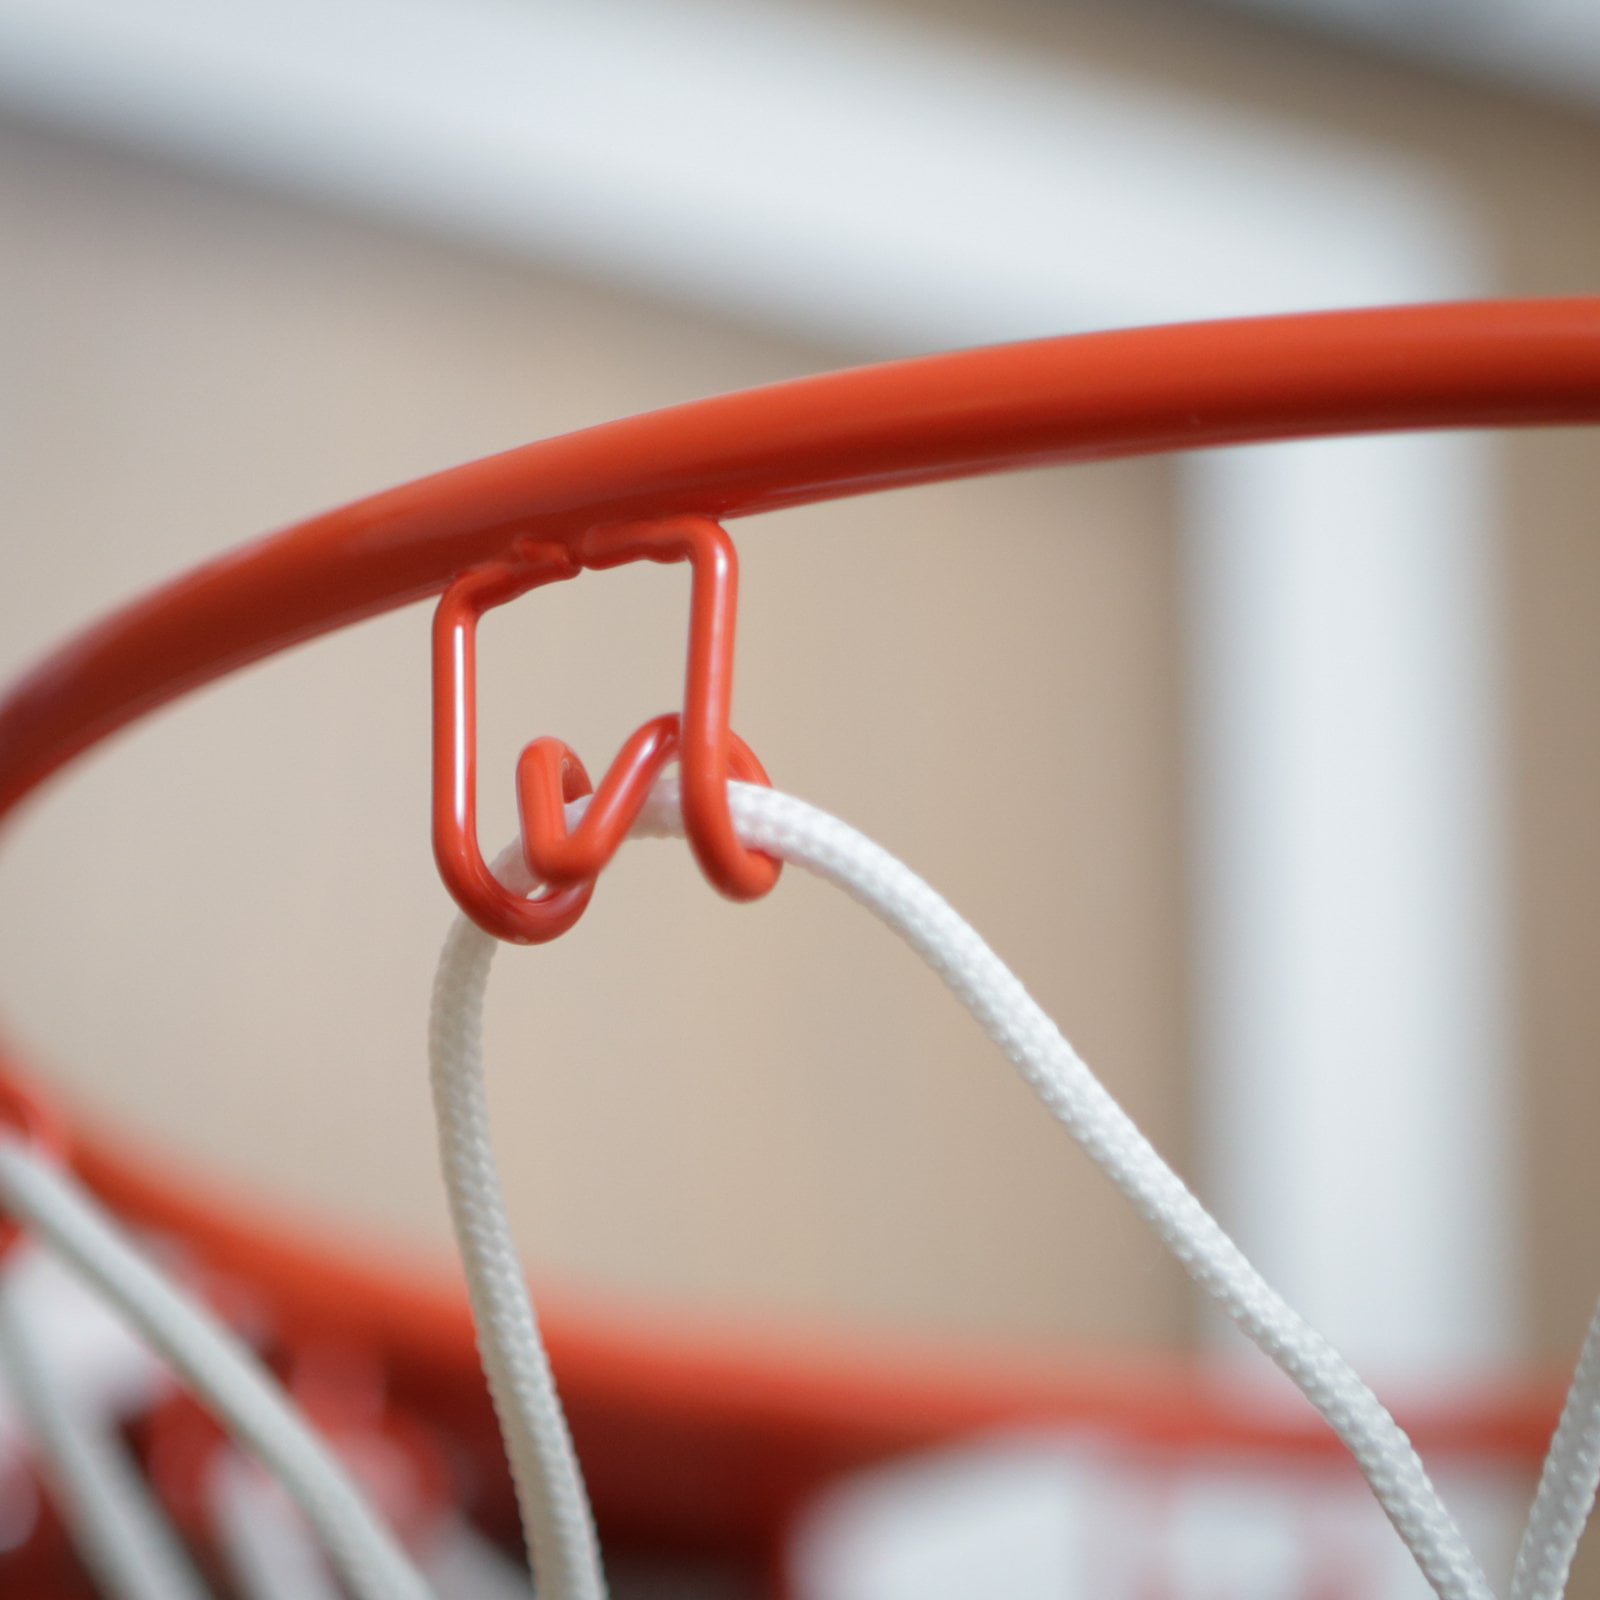 Deal: Spalding NBA Slam Jam Over-The-Door Team Edition Basketball